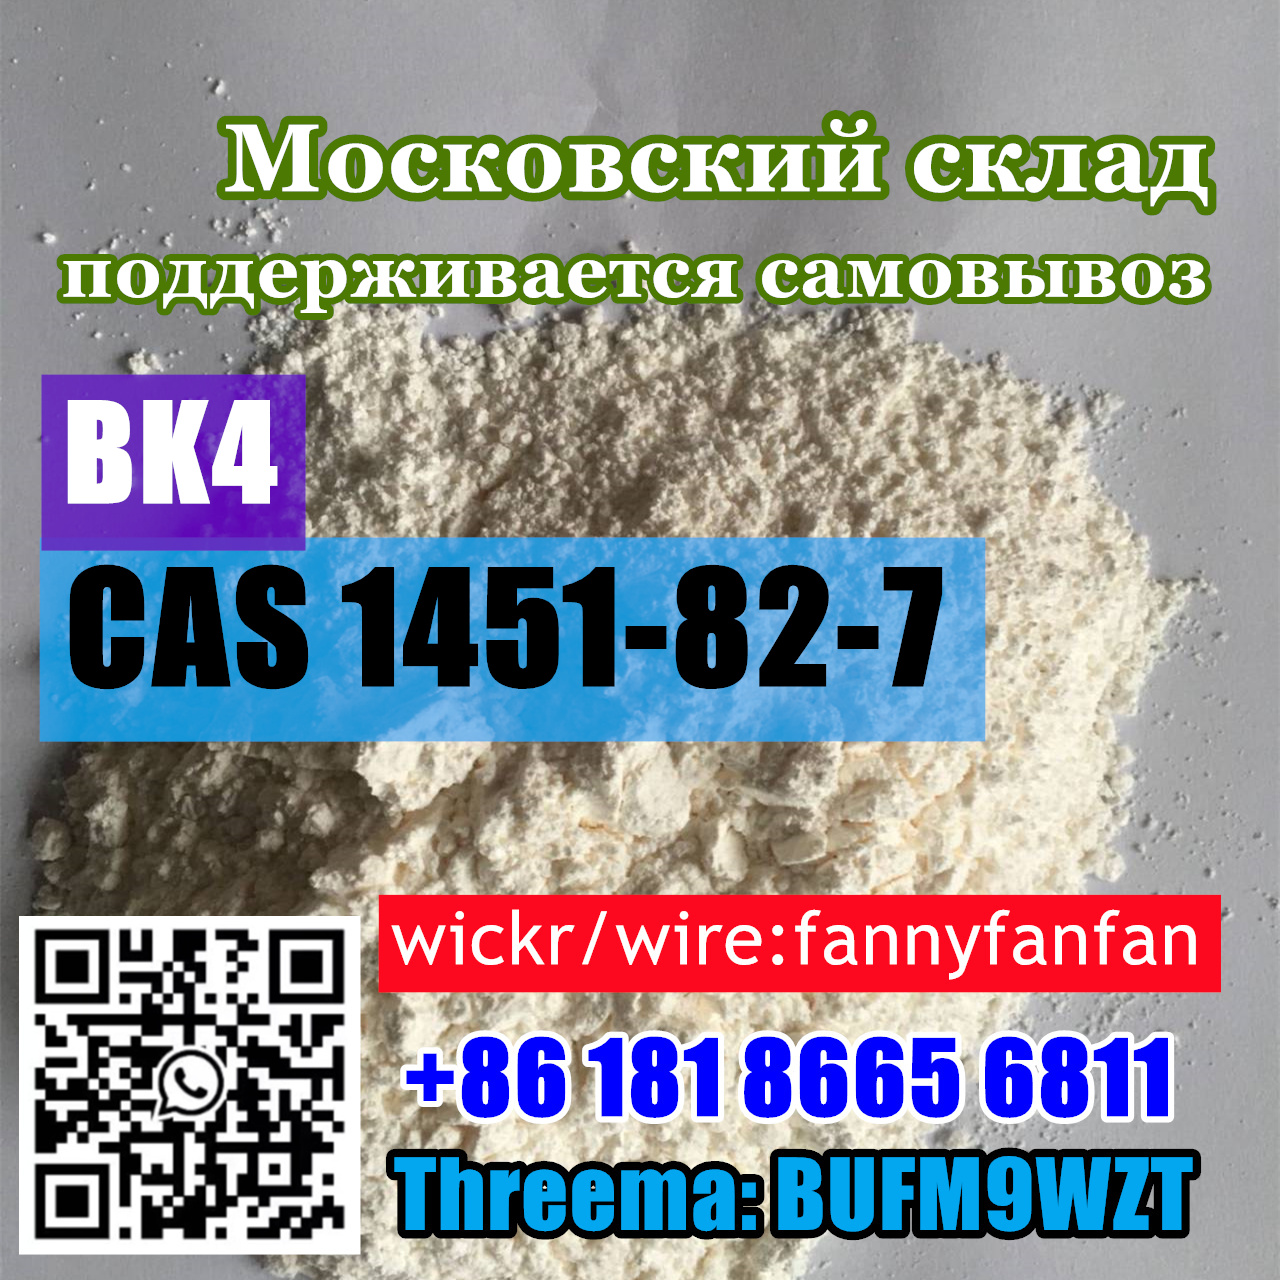 Wickr/Wire:fannyfanfan BK4 Bromketon-4 2-bromo-4-methyl-propiophenone CAS 1451-82-7 в городе Москва, фото 3, Московская область